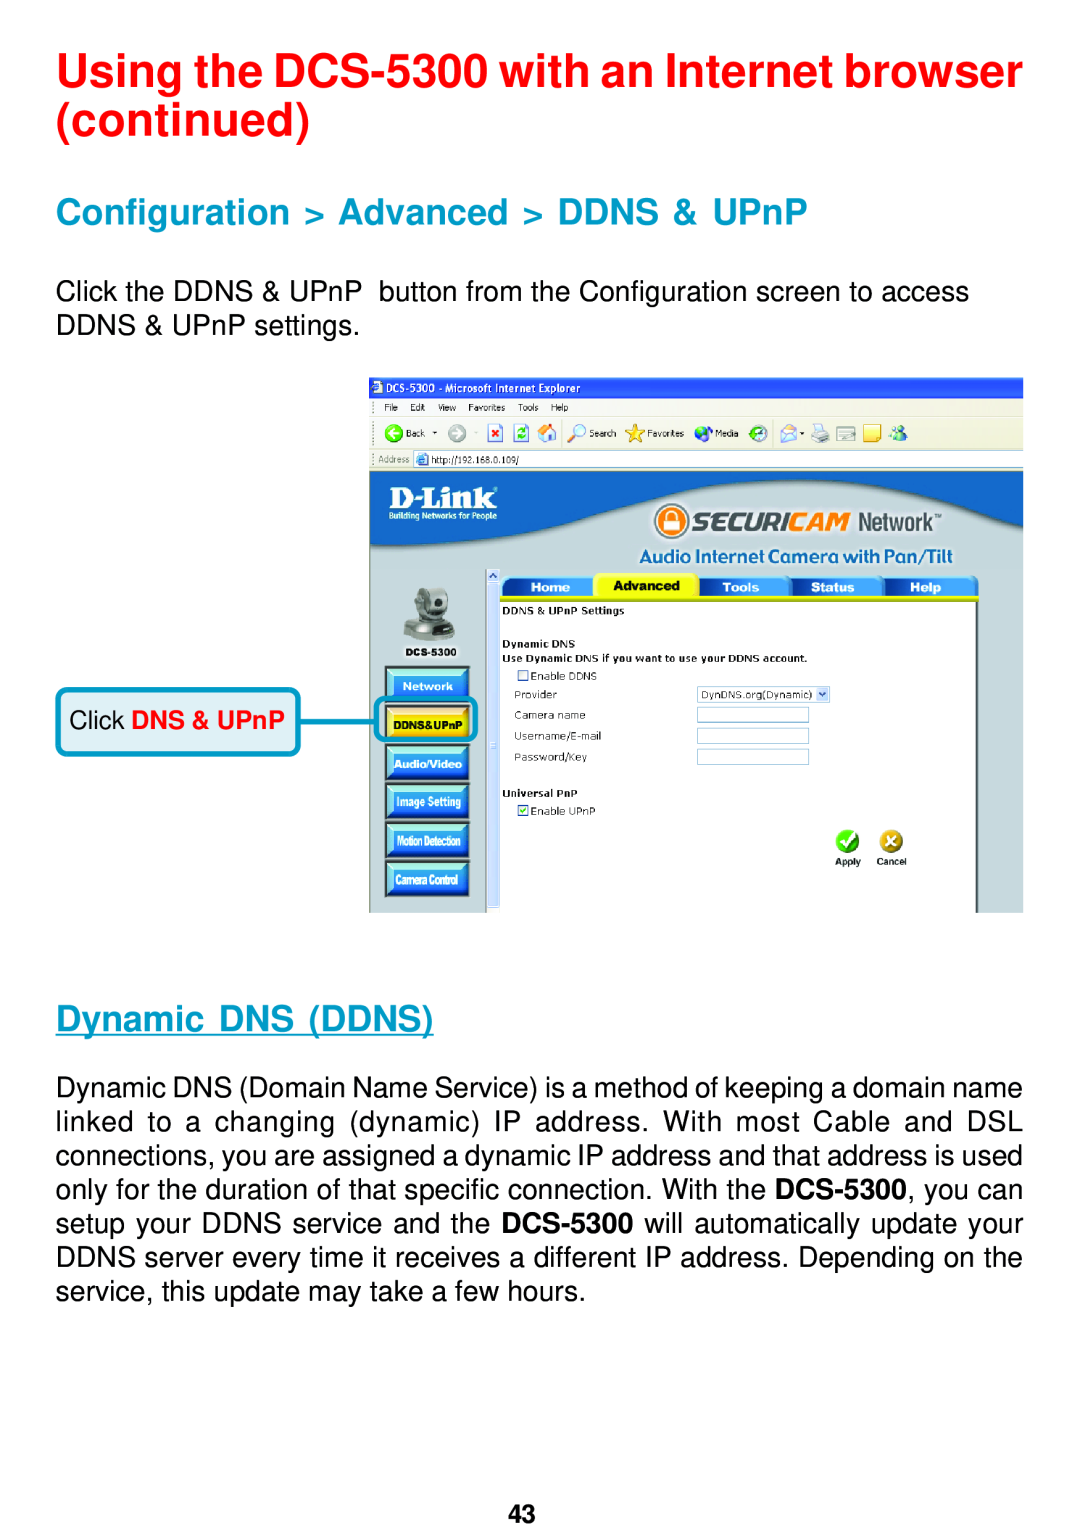 D-Link DCS-5300 manual Configuration Advanced DDNS & UPnP, Dynamic DNS DDNS, Click DNS & UPnP 